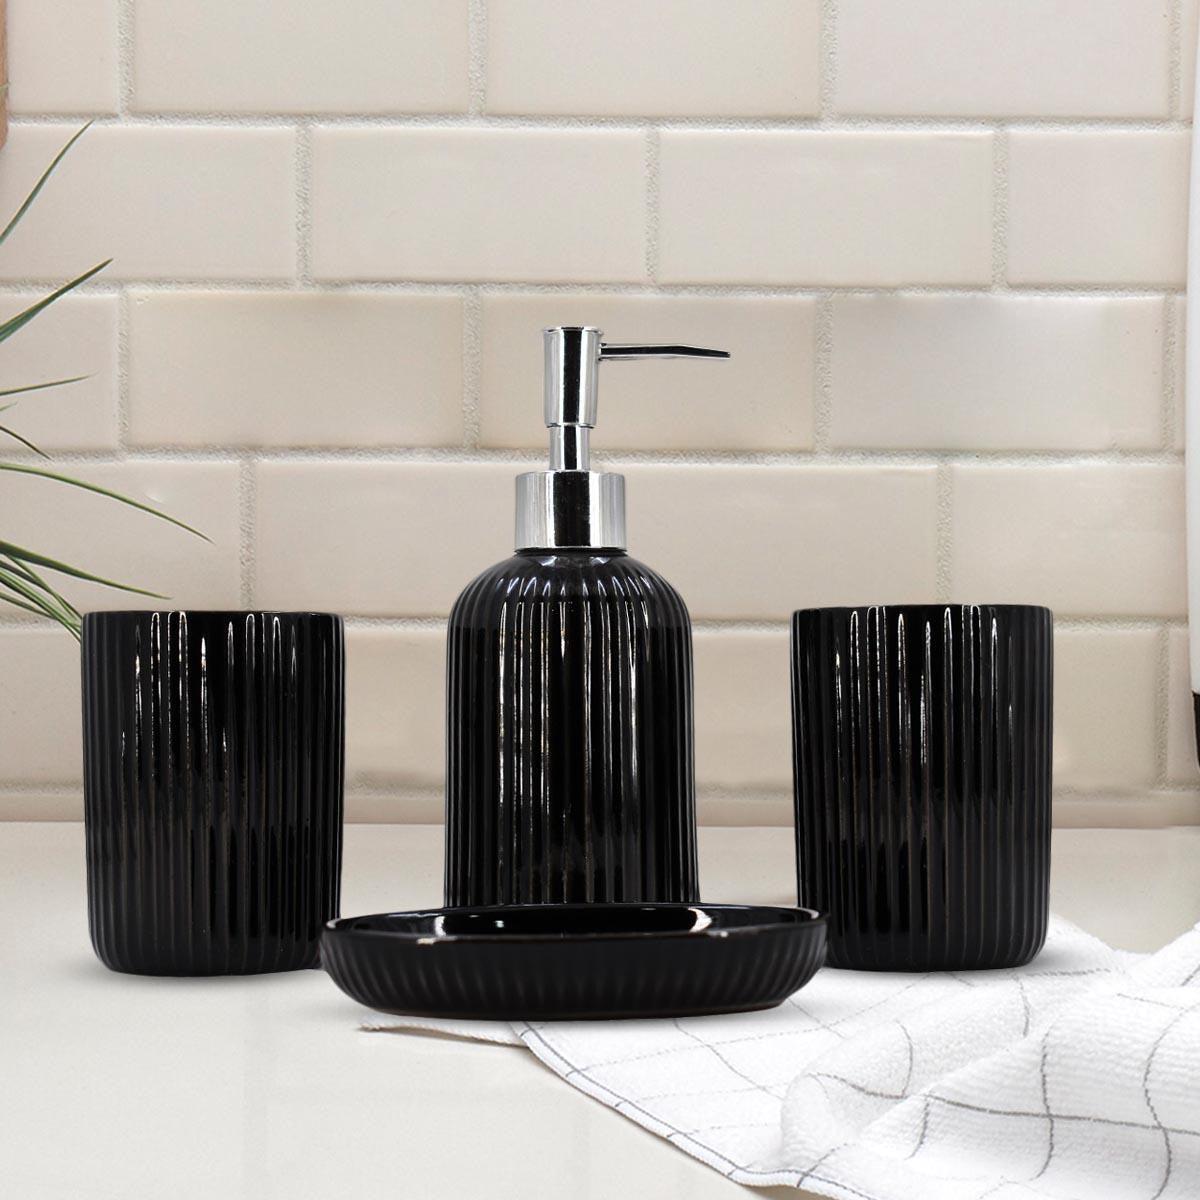 Ceramic Bathroom Accessories Set of 4 Bath Set with Soap Dispenser (9631)